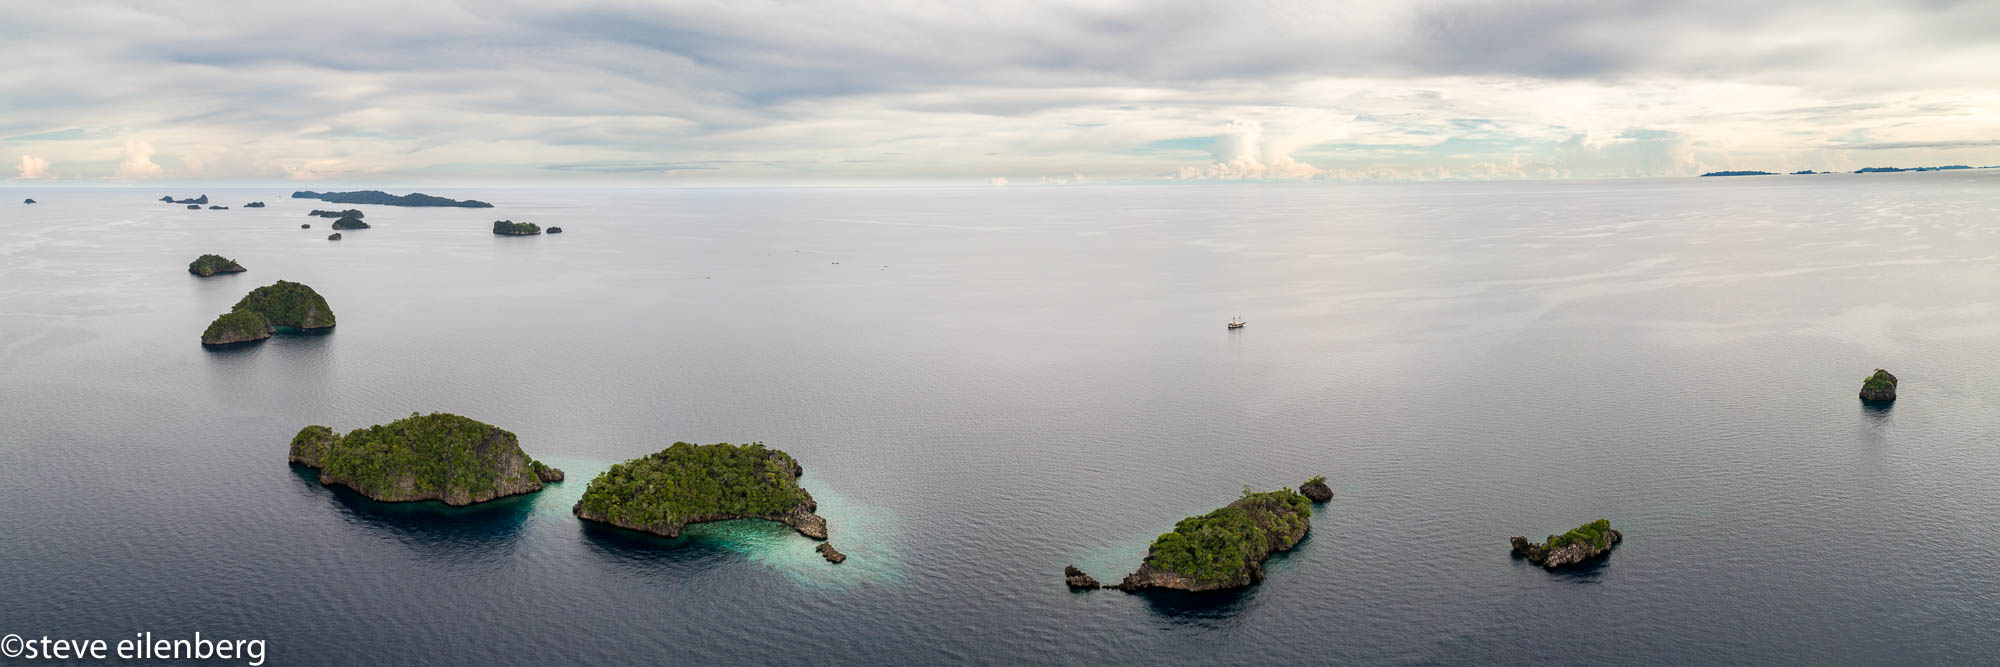 Tiny Islands. Raja Ampat Indonesia